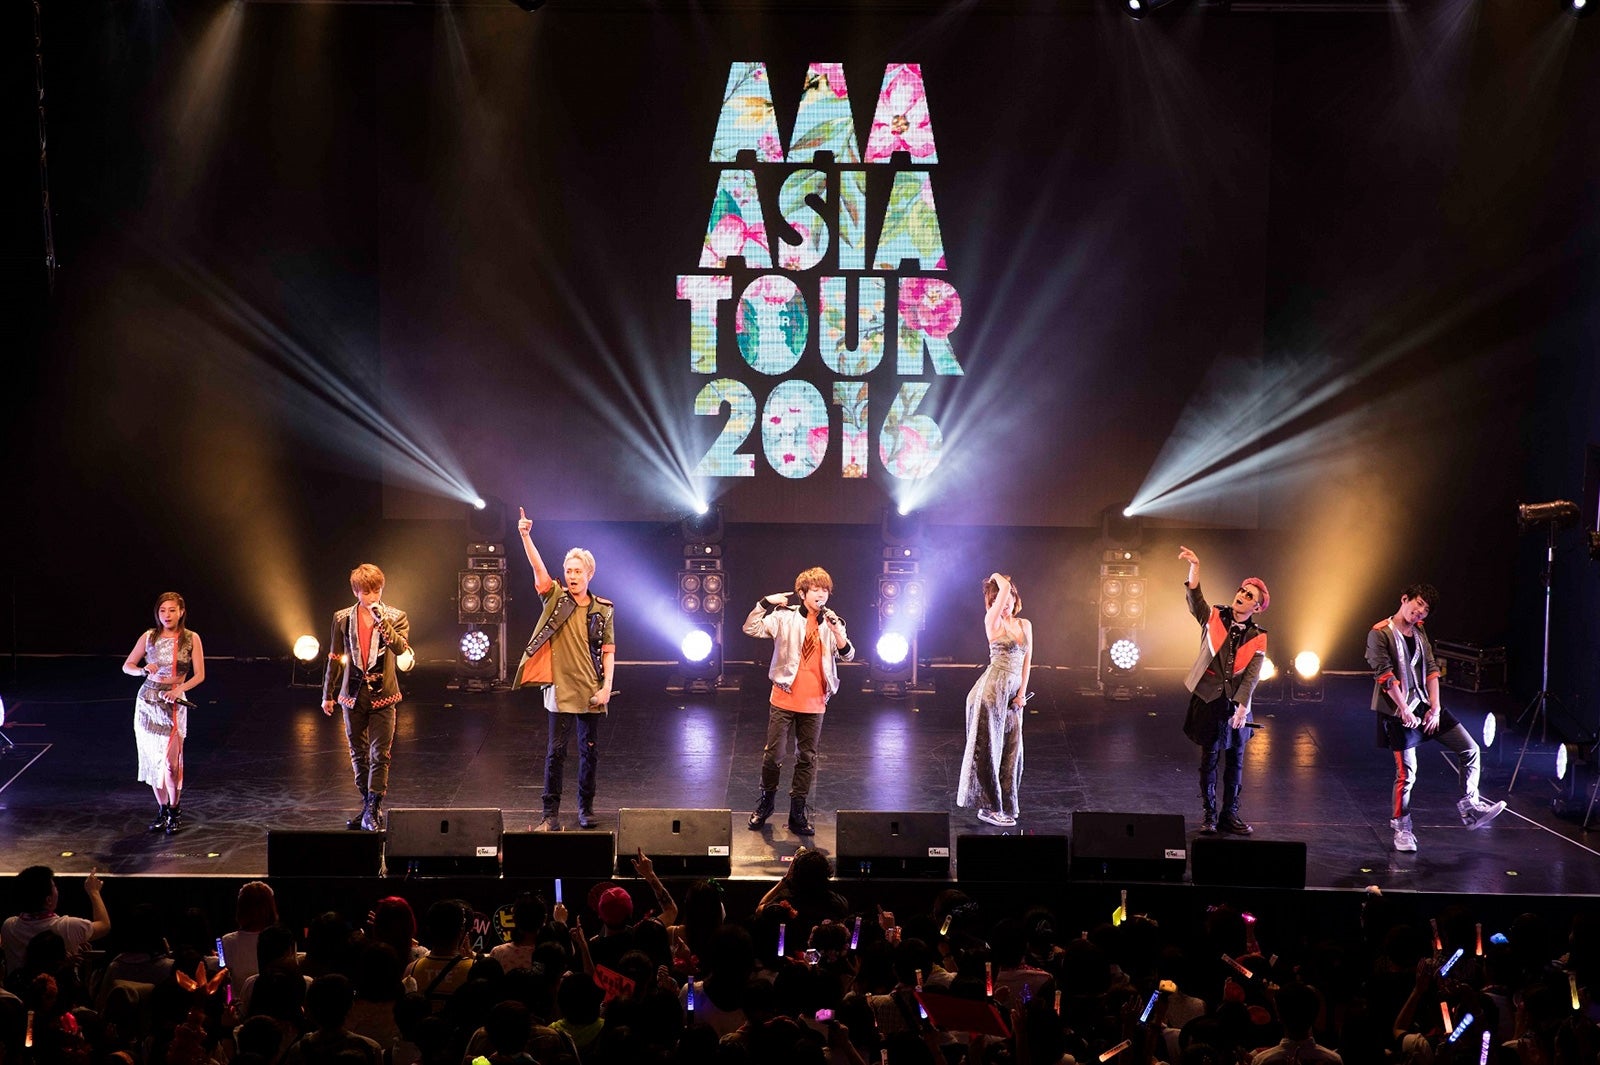 AAAを徹底網羅 ファン垂涎セットリストでアジアツアー開幕 - モデルプレス